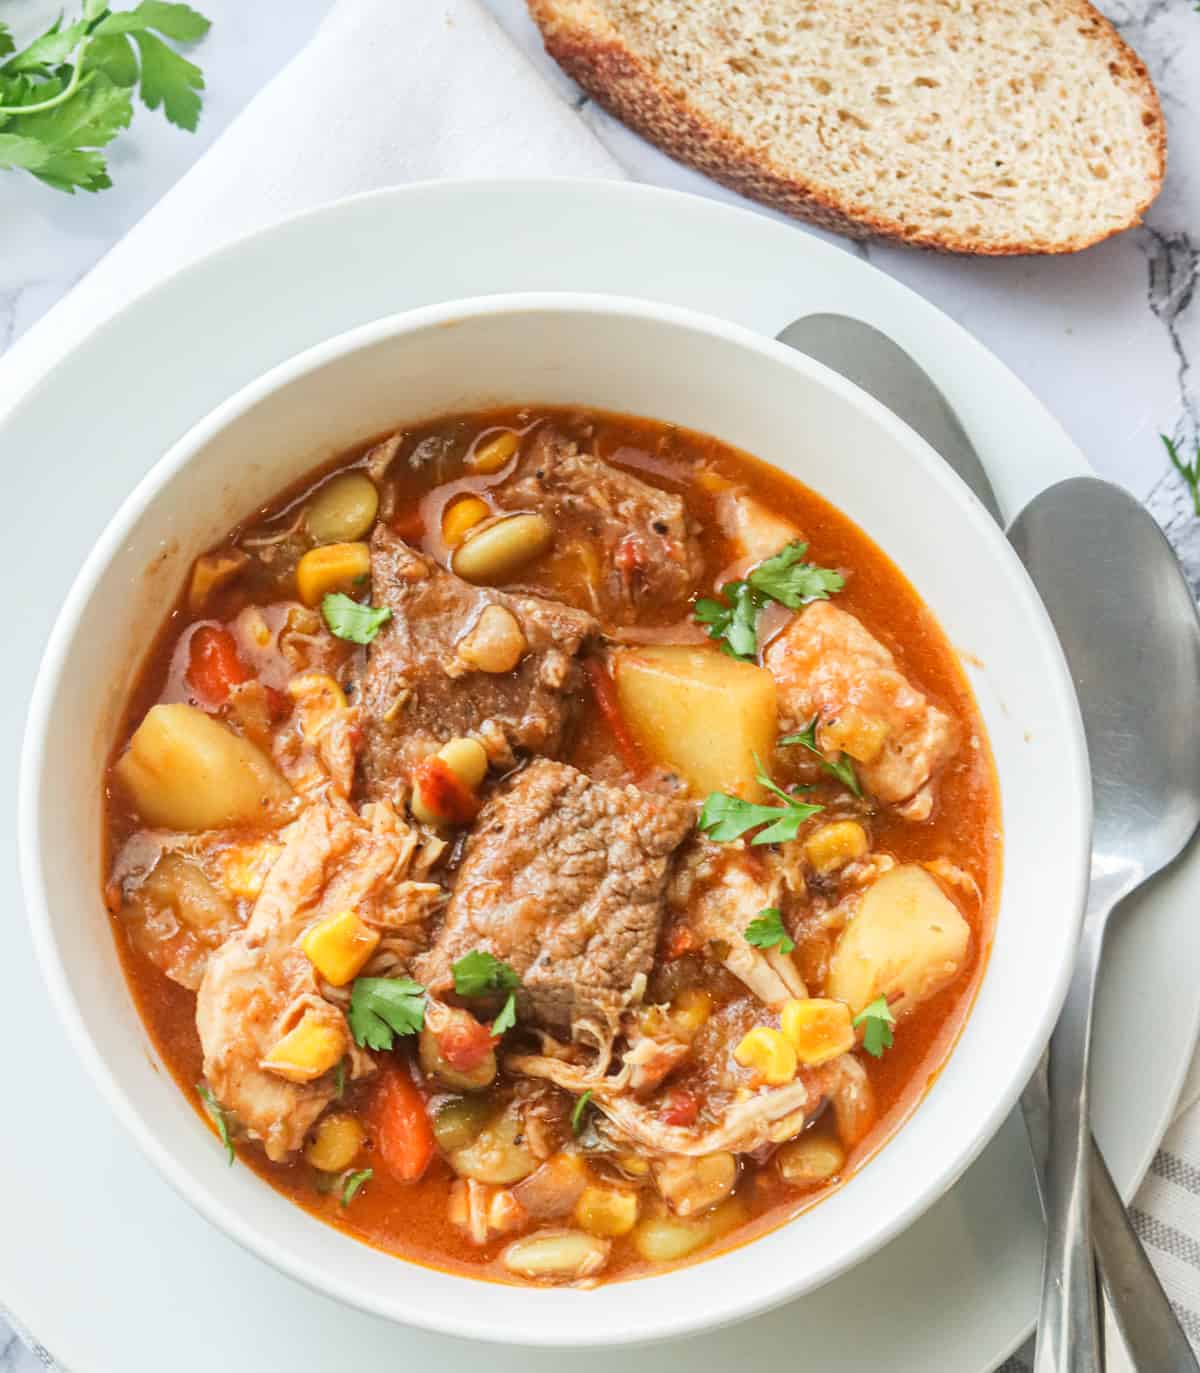 Burgoo is a rich, hearty stew